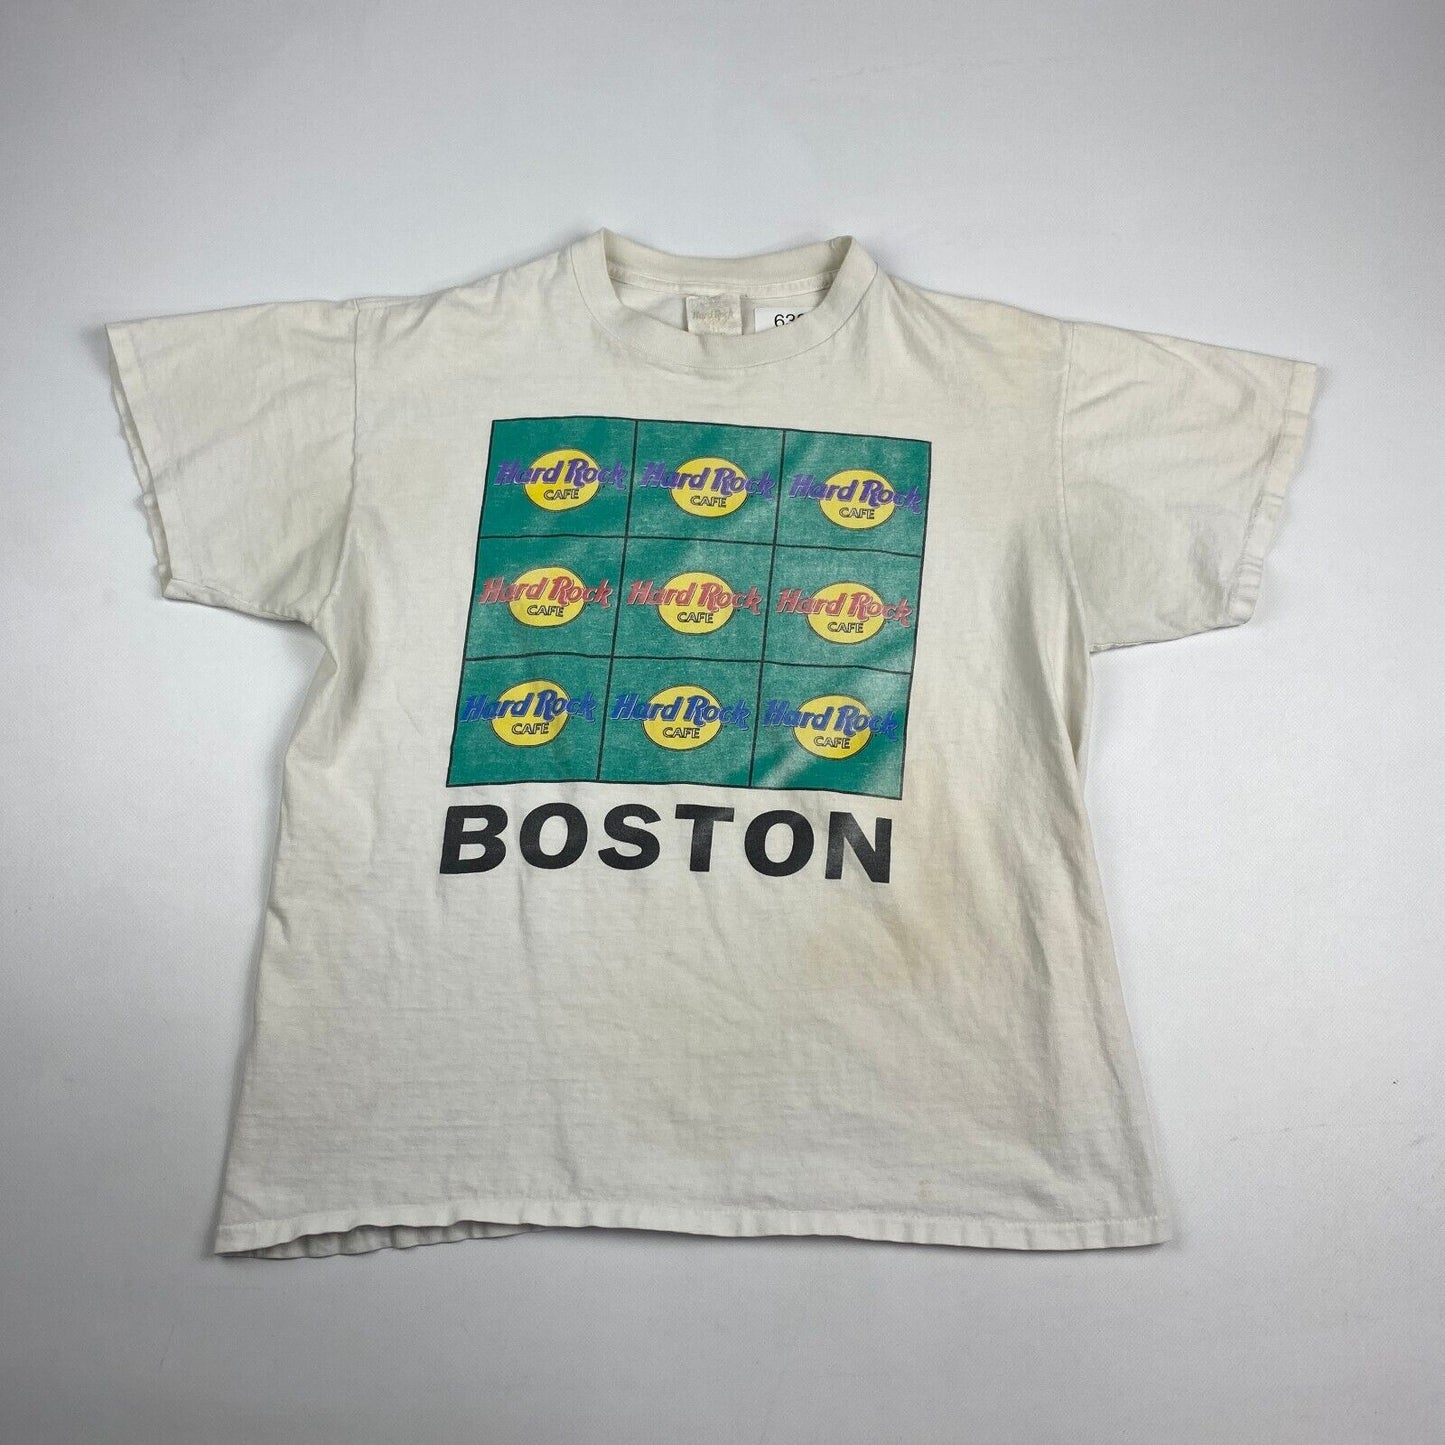 VINTAGE 90s Hard Rock Cafe Boston White T-Shirt sz Large Men